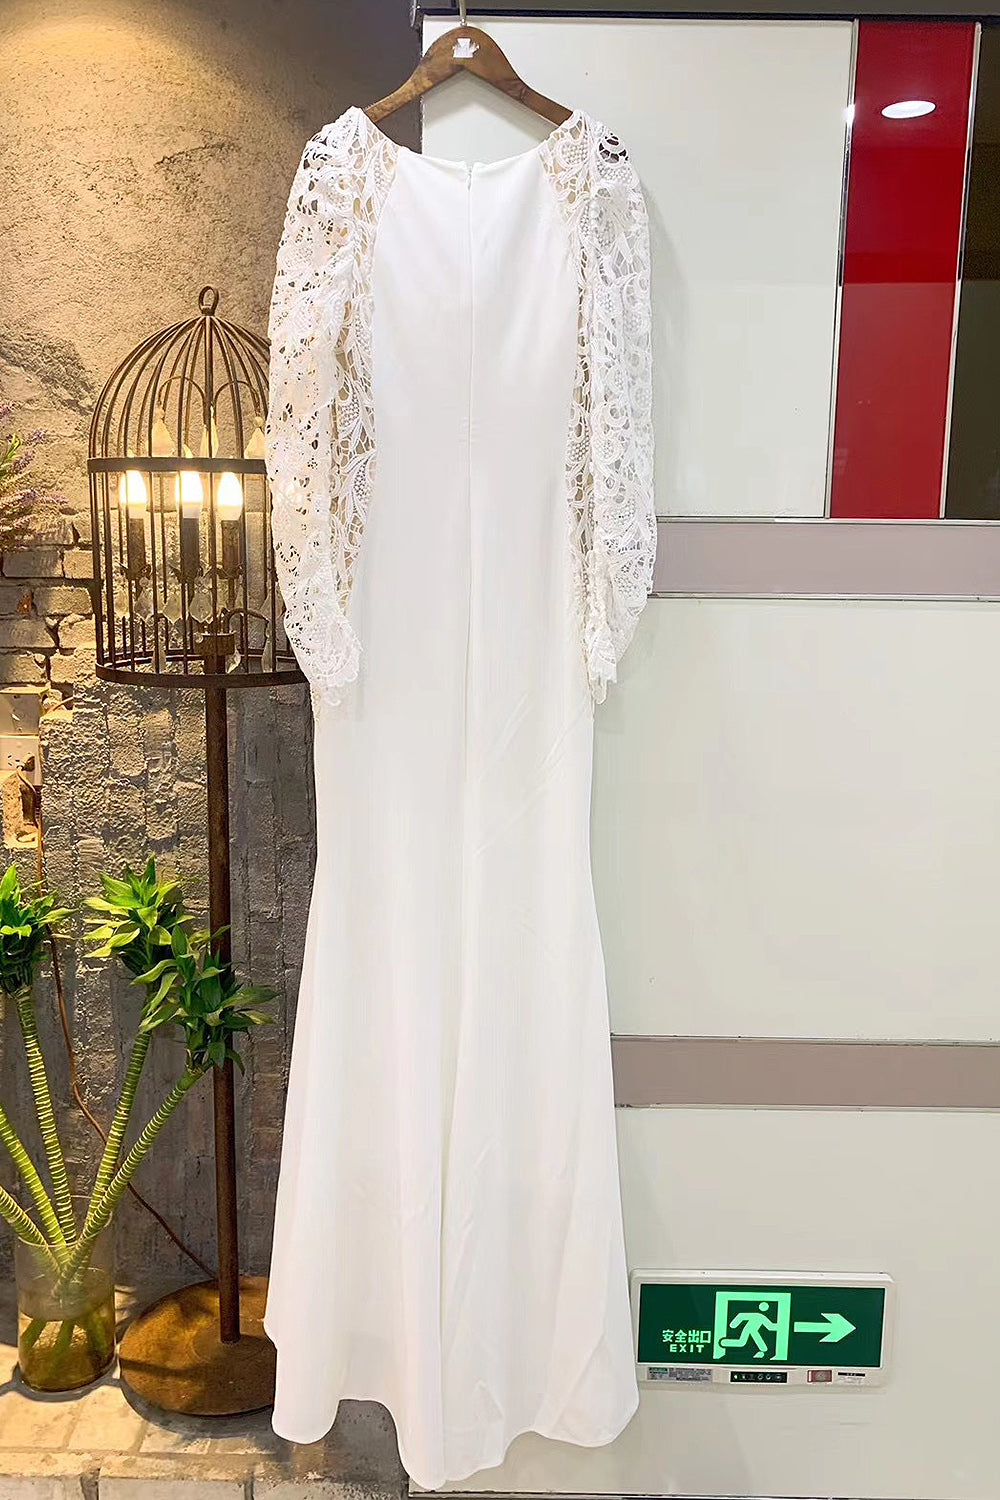 Luxury and Graceful White Lace Long Sleeves Mermaid Trumpet Wedding Dress - IULOVER